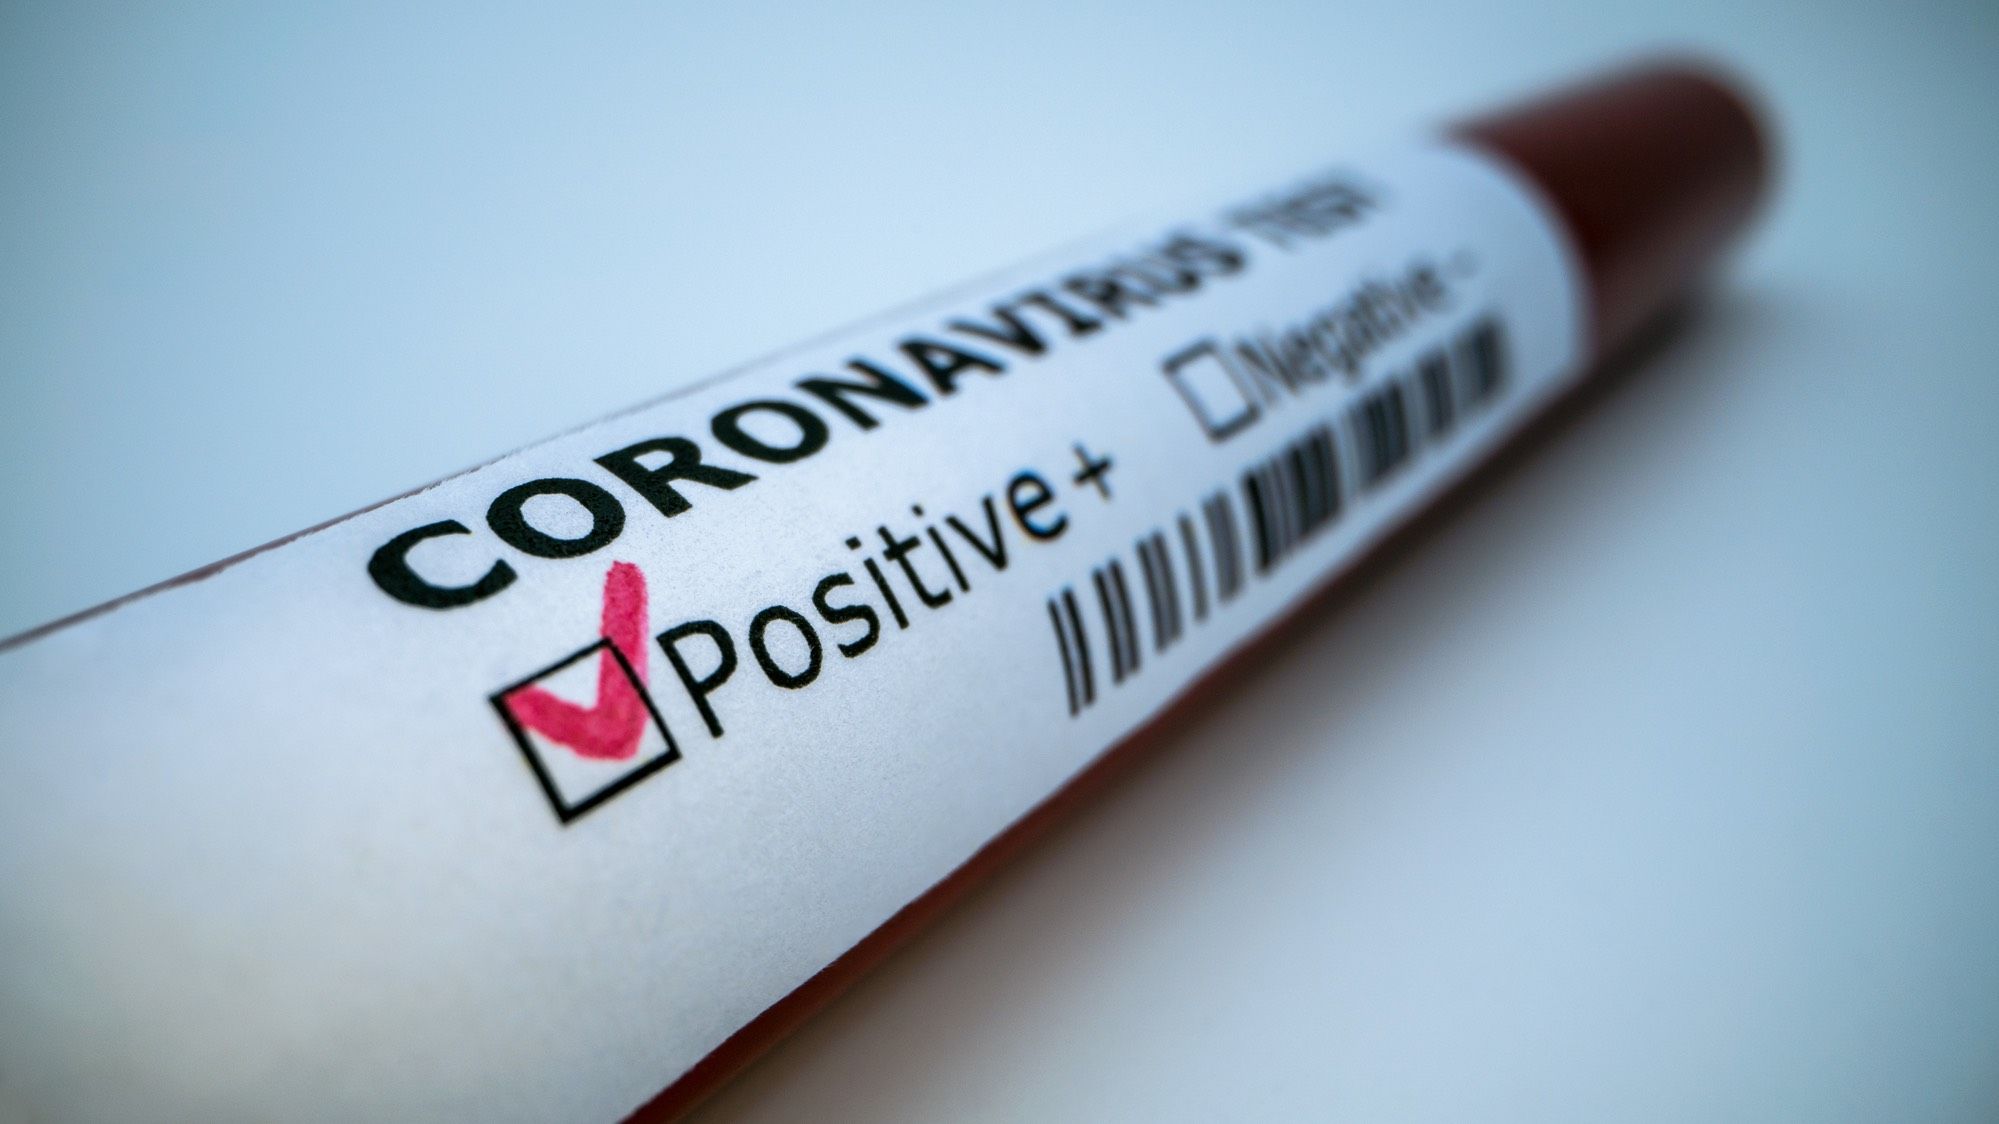 coronavirus tube testing positive after Princess cruise line infection